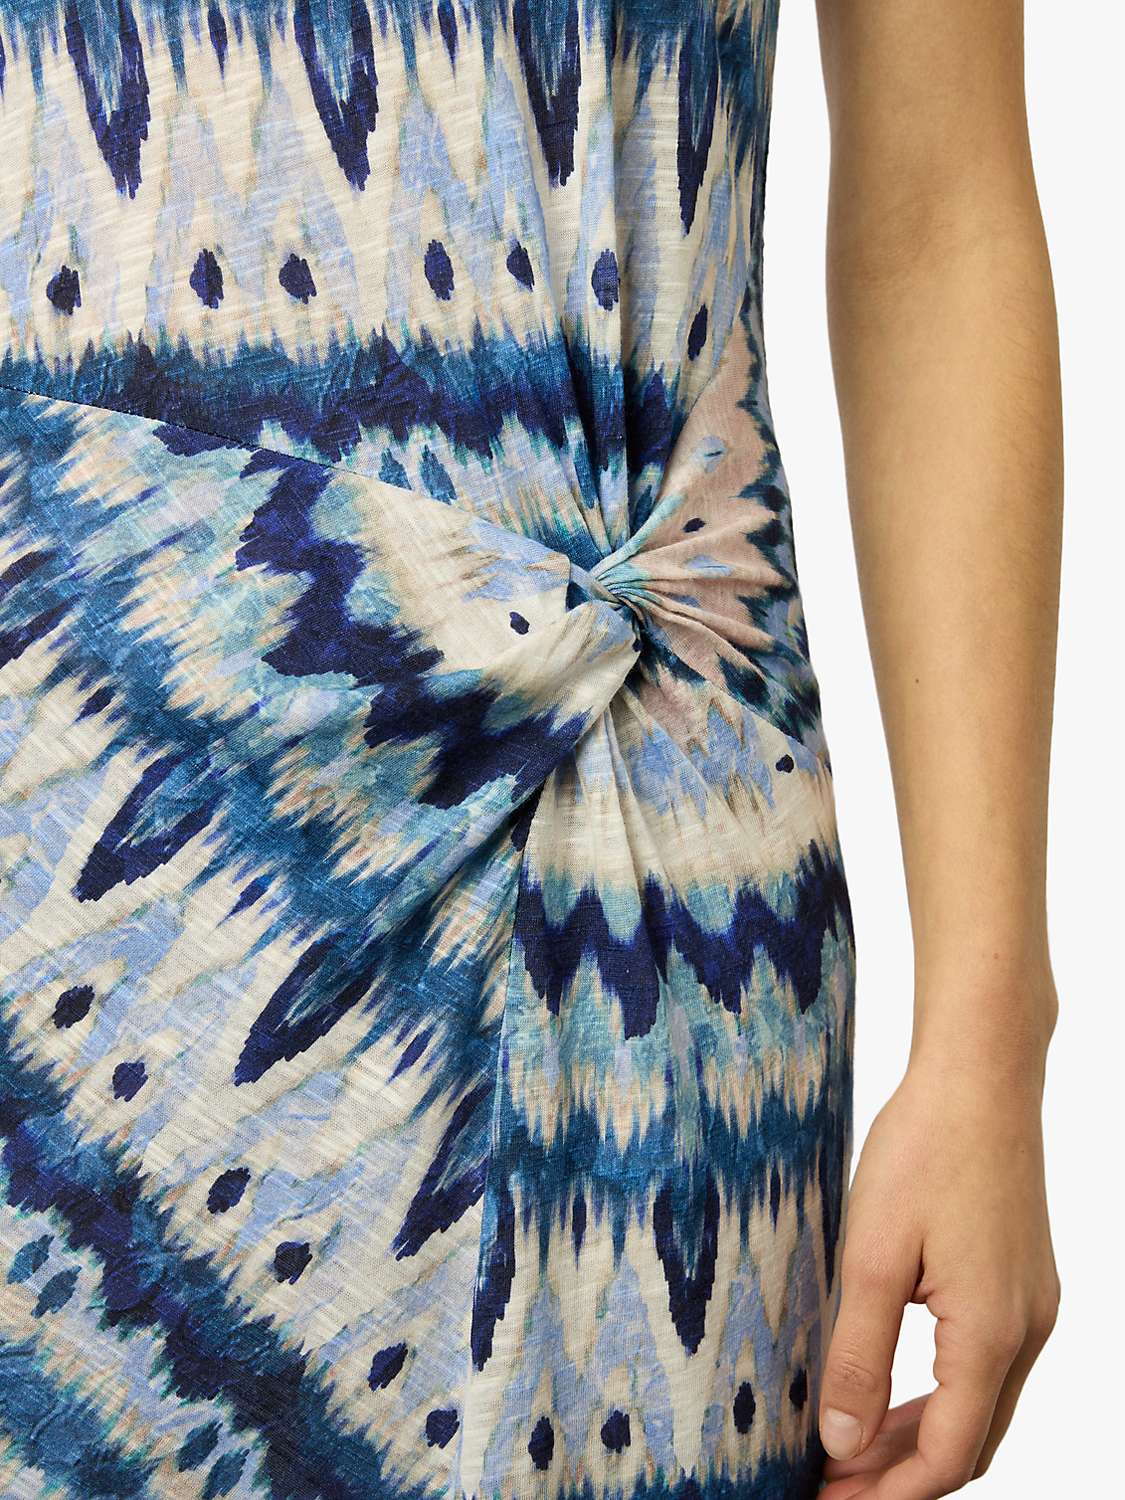 Buy Gerard Darel Elissa Abstract Print Summer Midi Dress, Blue/Multi Online at johnlewis.com